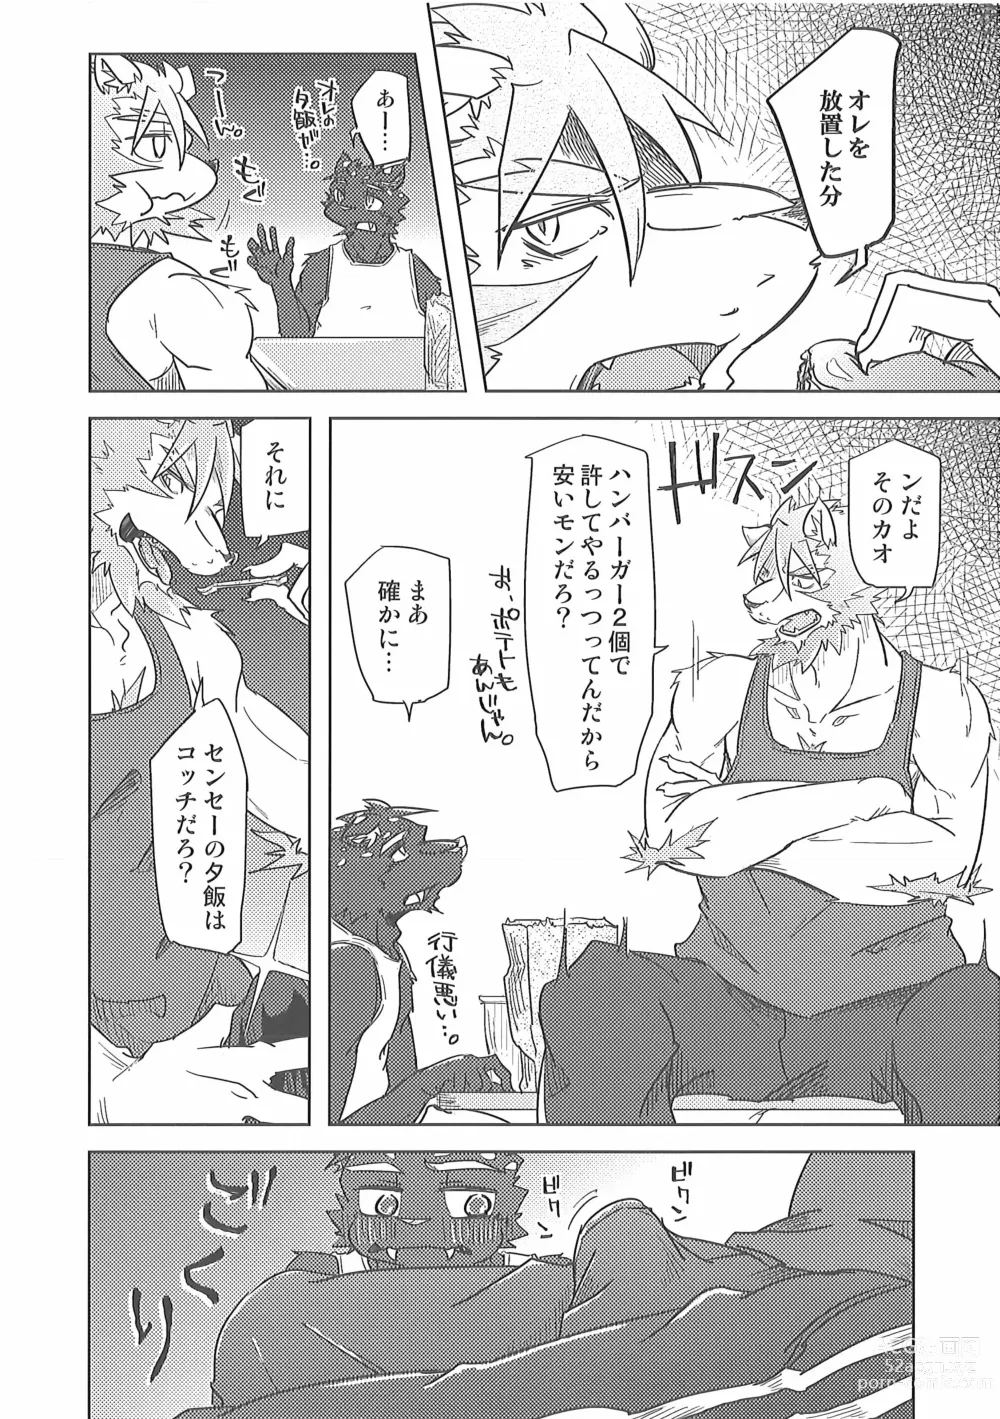 Page 13 of doujinshi Crazy Waltz